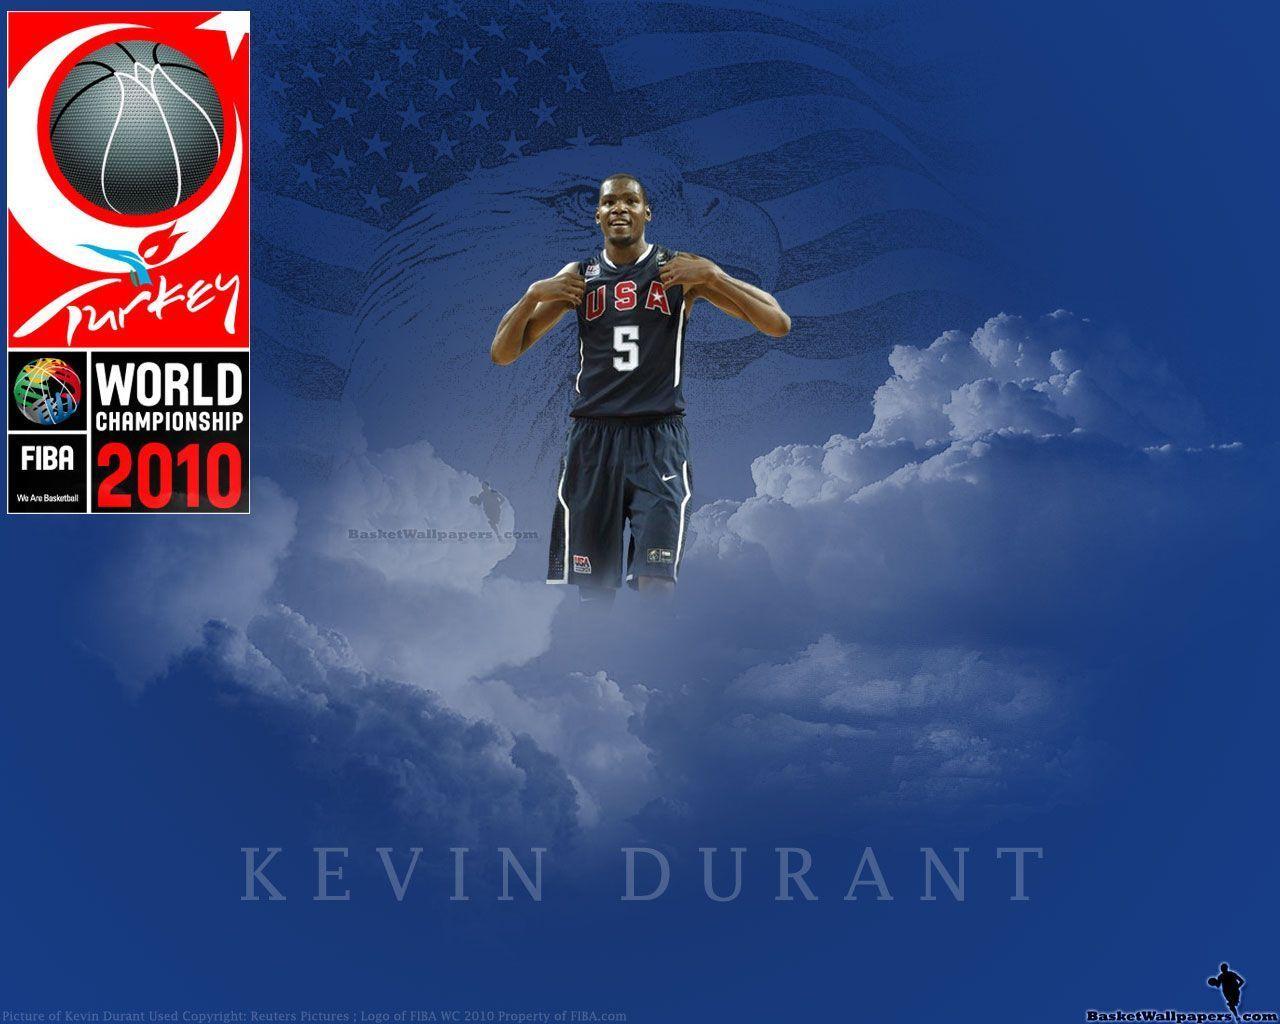 Kevin Durant Wallpaper at BasketWallpaper